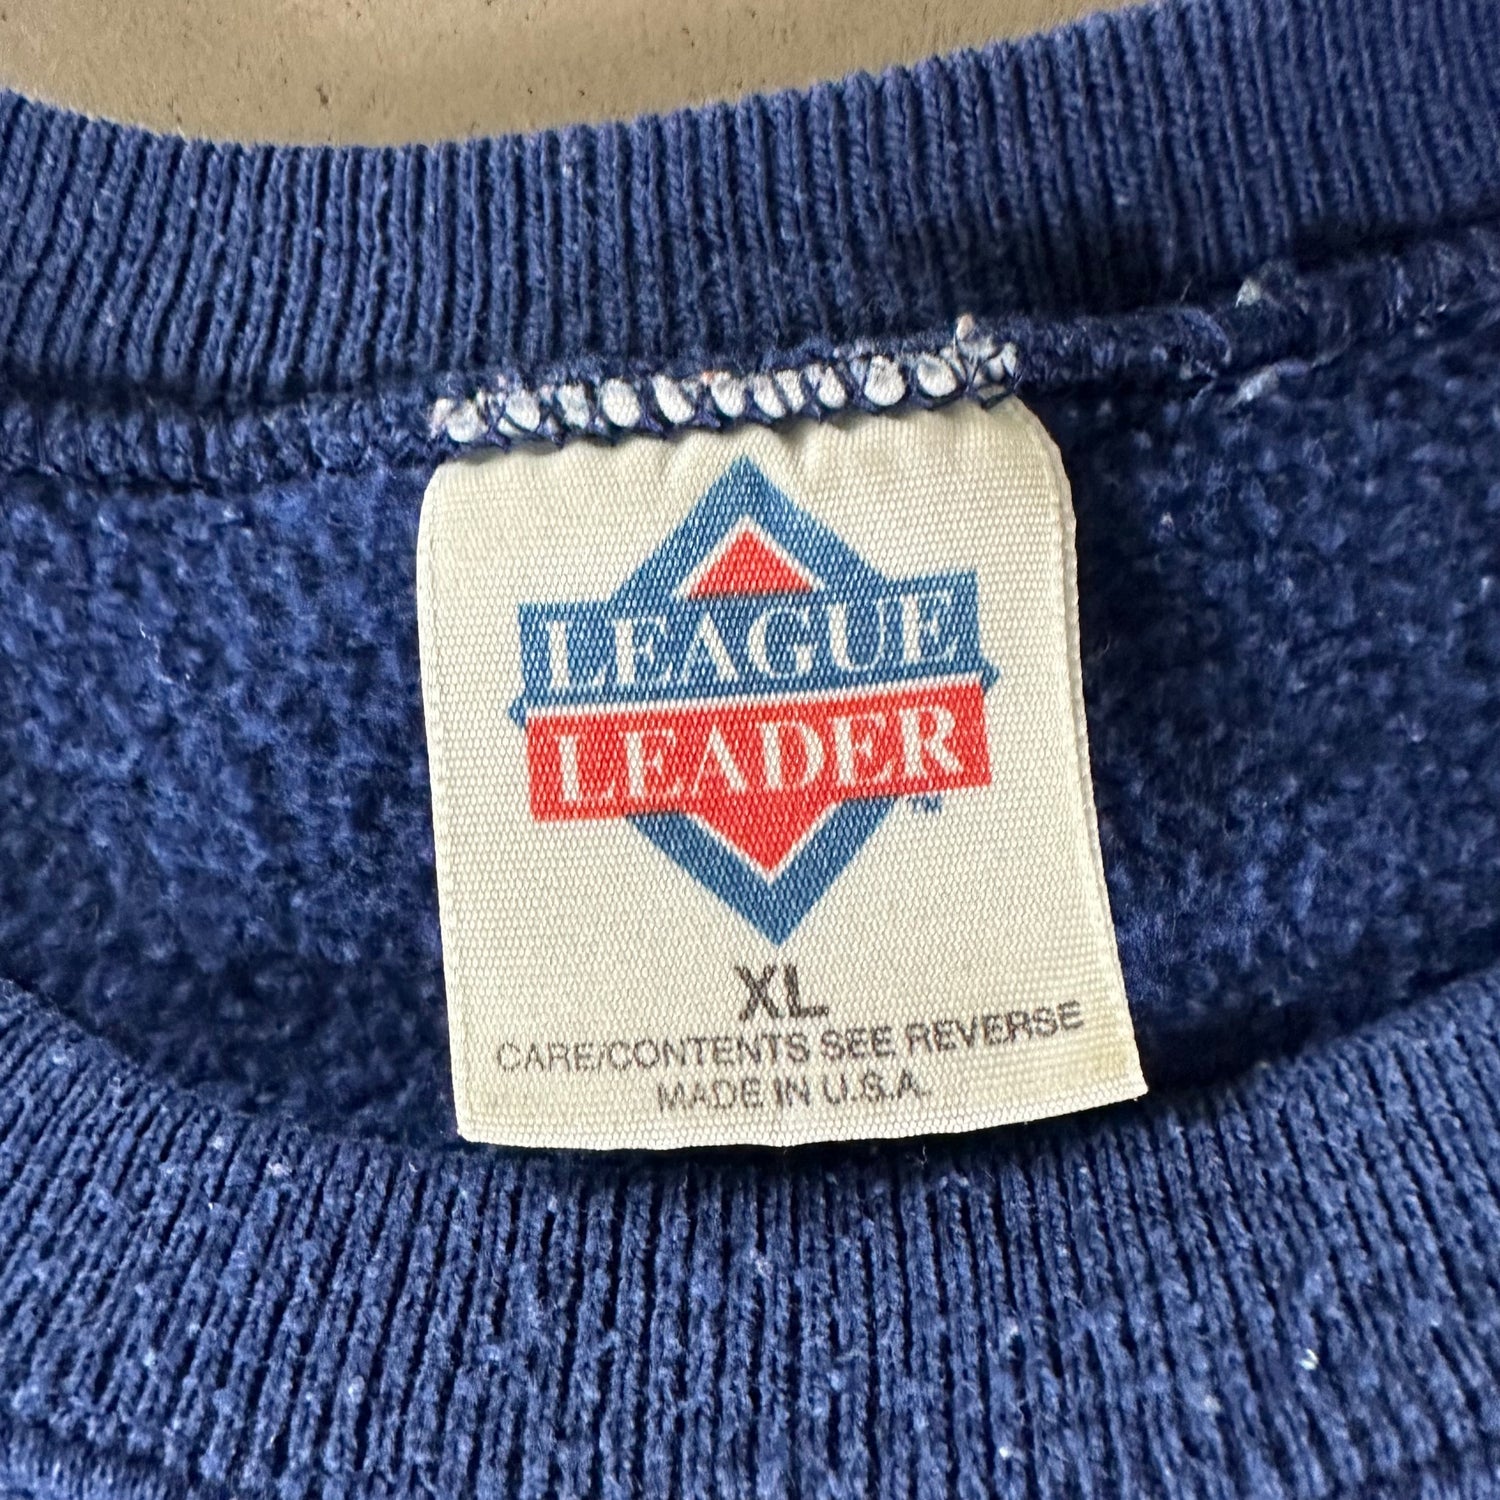 Vintage 1994 University of Tennessee Sweatshirt size XL